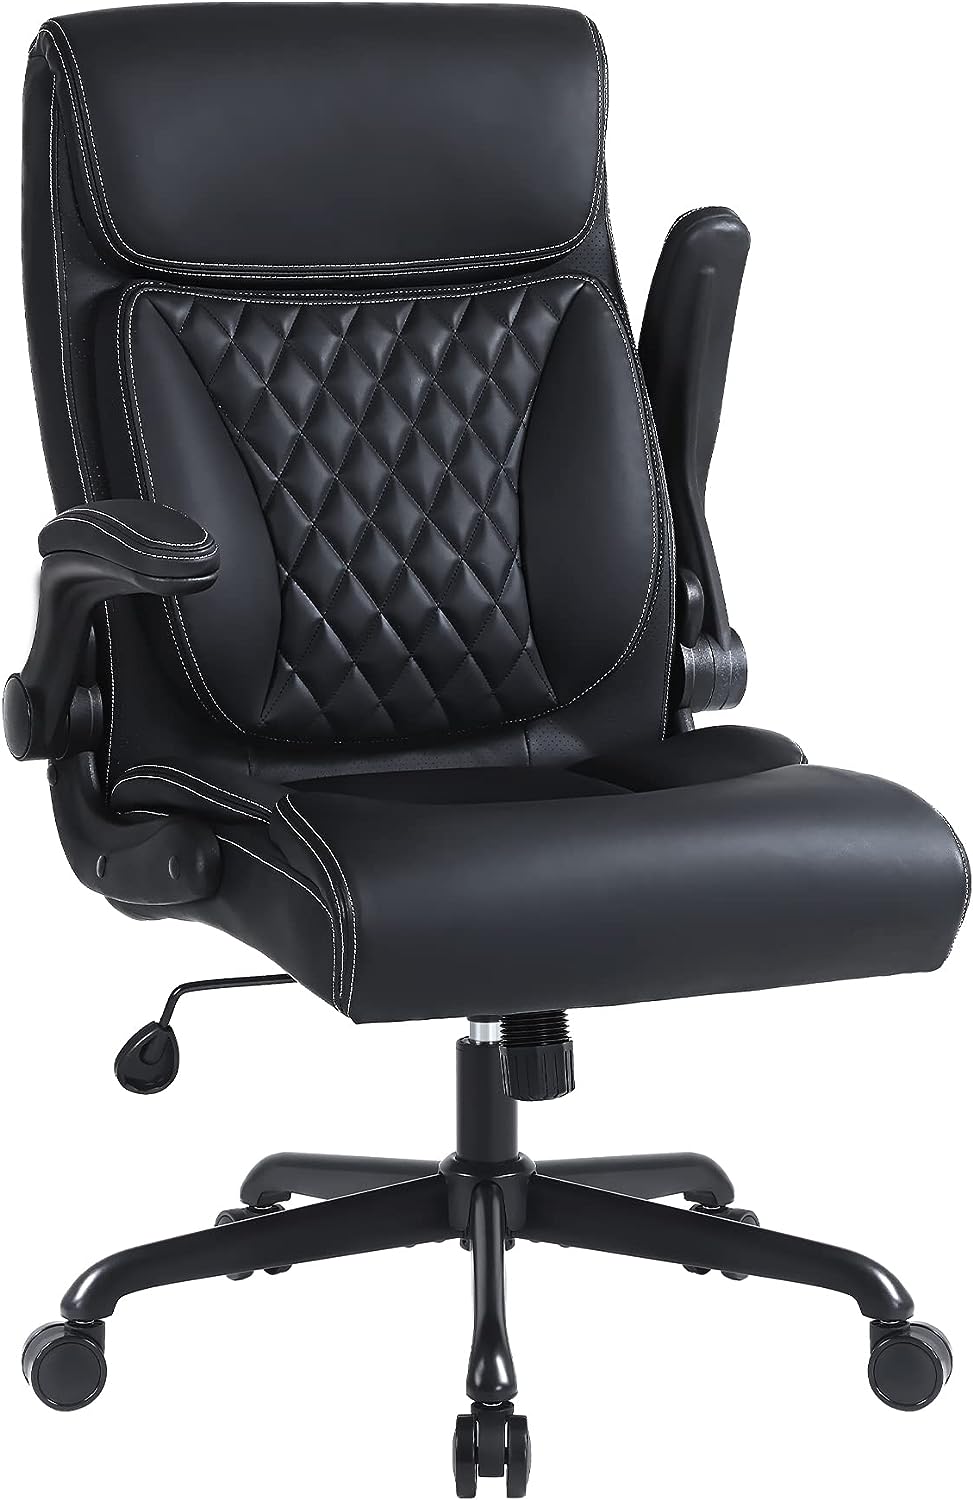 Silla de oficina, silla ergonómica para el hogar, sillas de